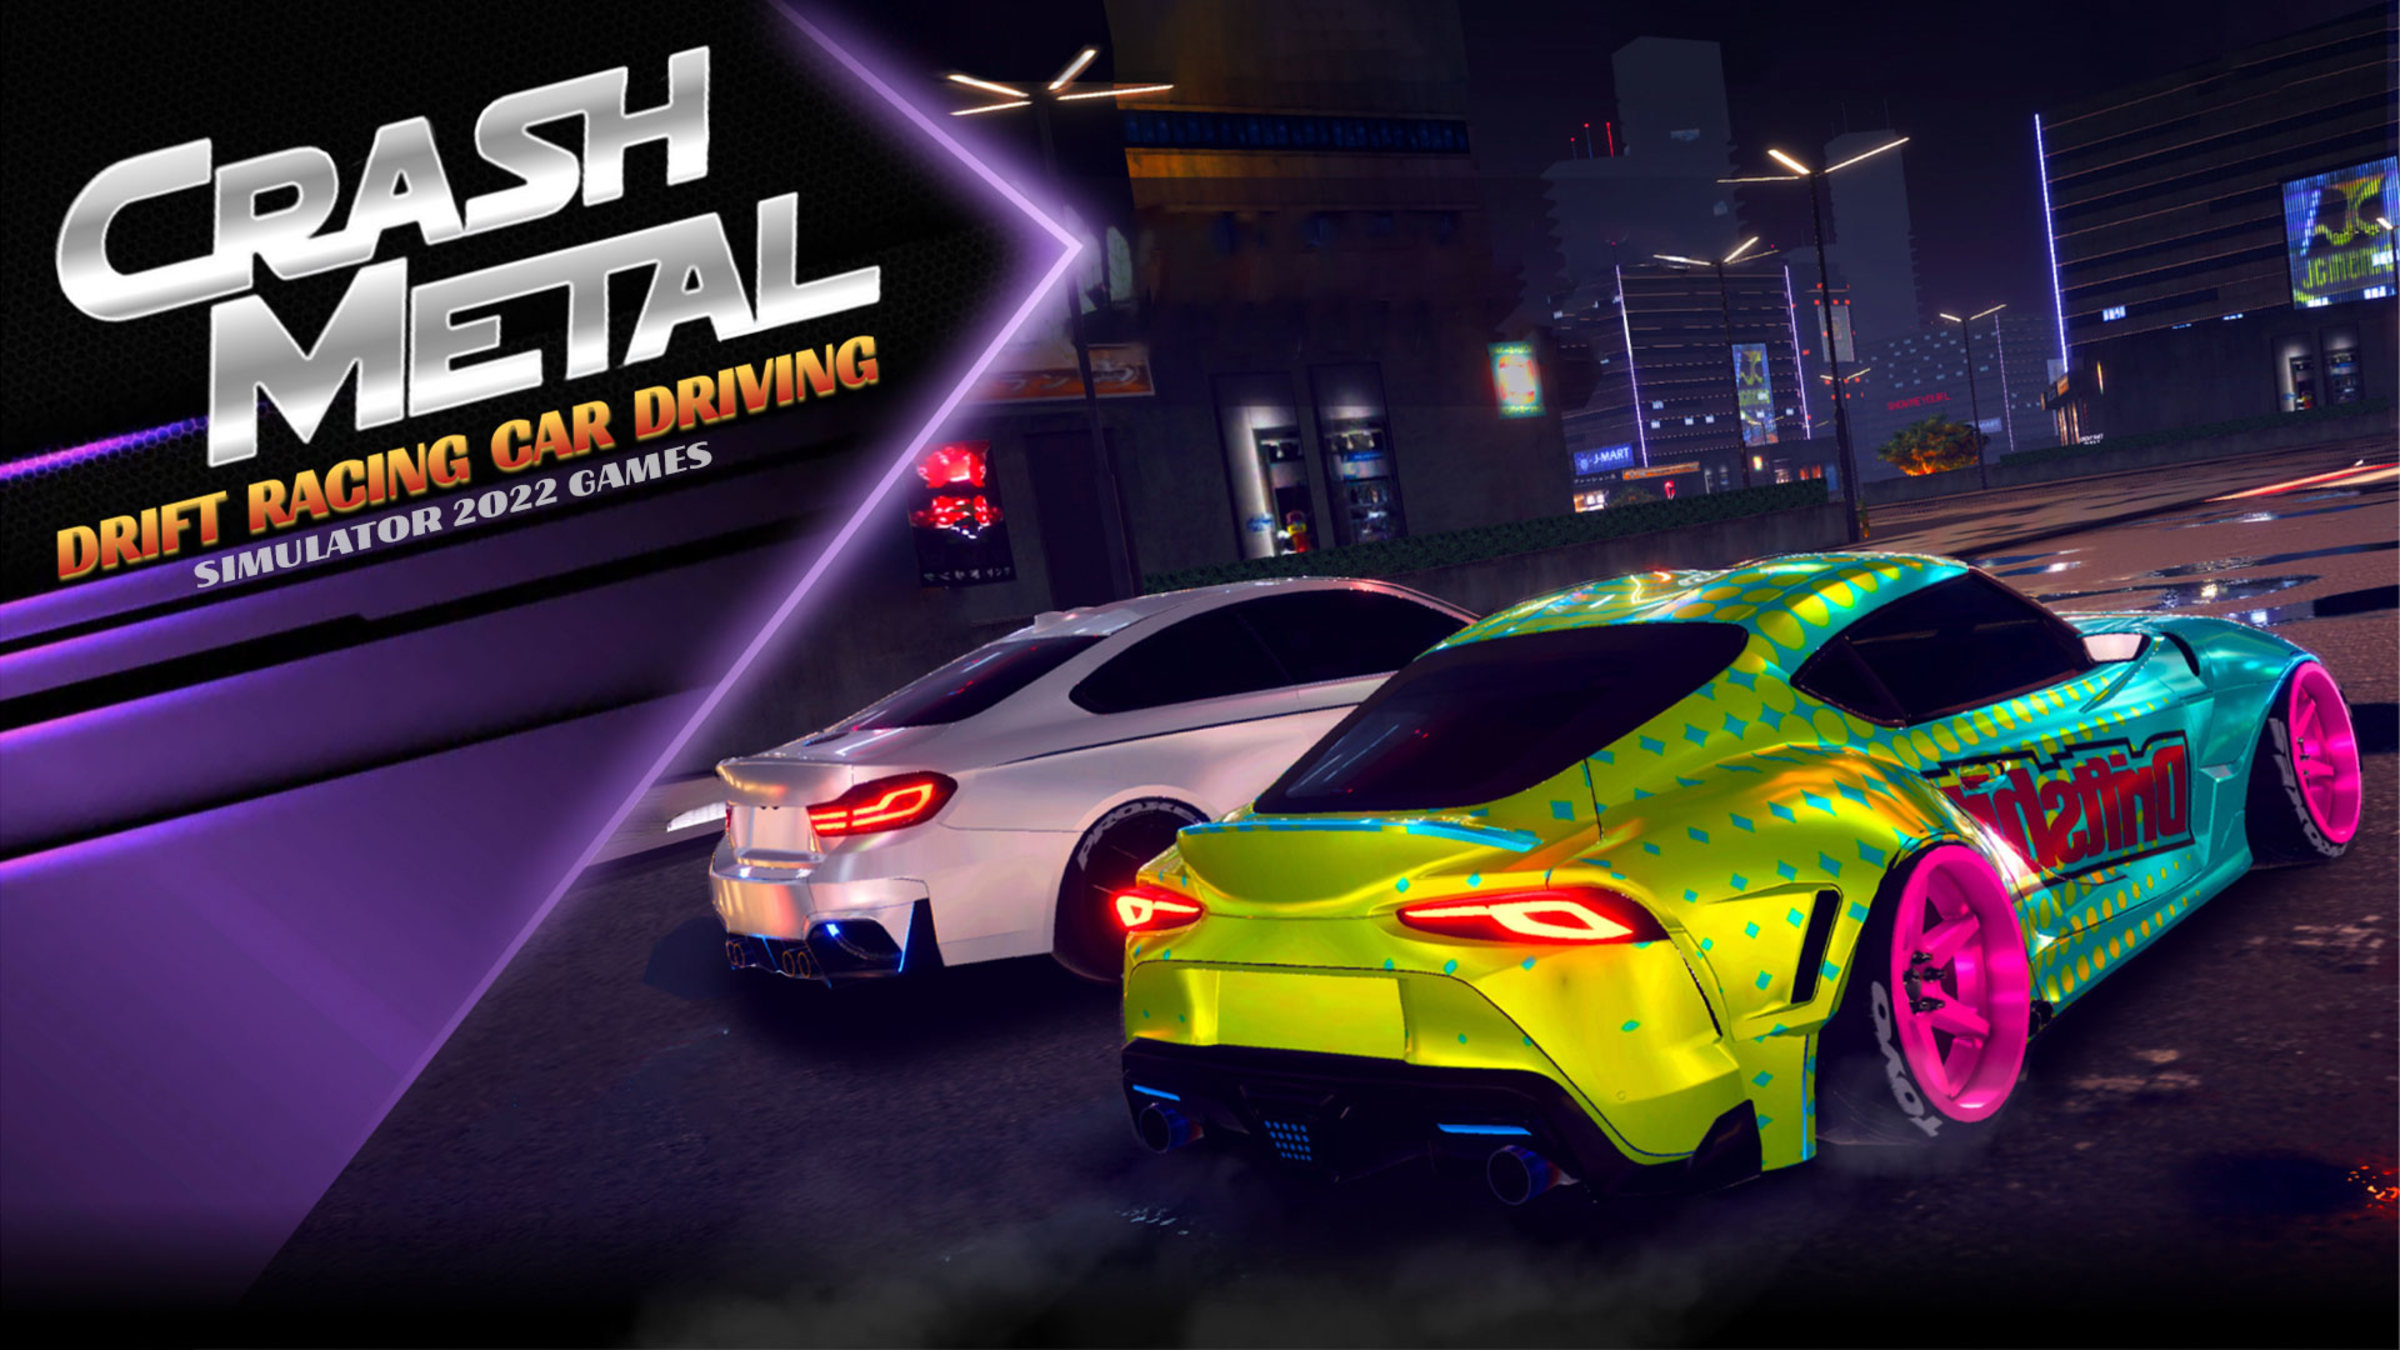 CrashMetal - Drift Racing Car Driving Simulator 2022 Games for Nintendo Switch